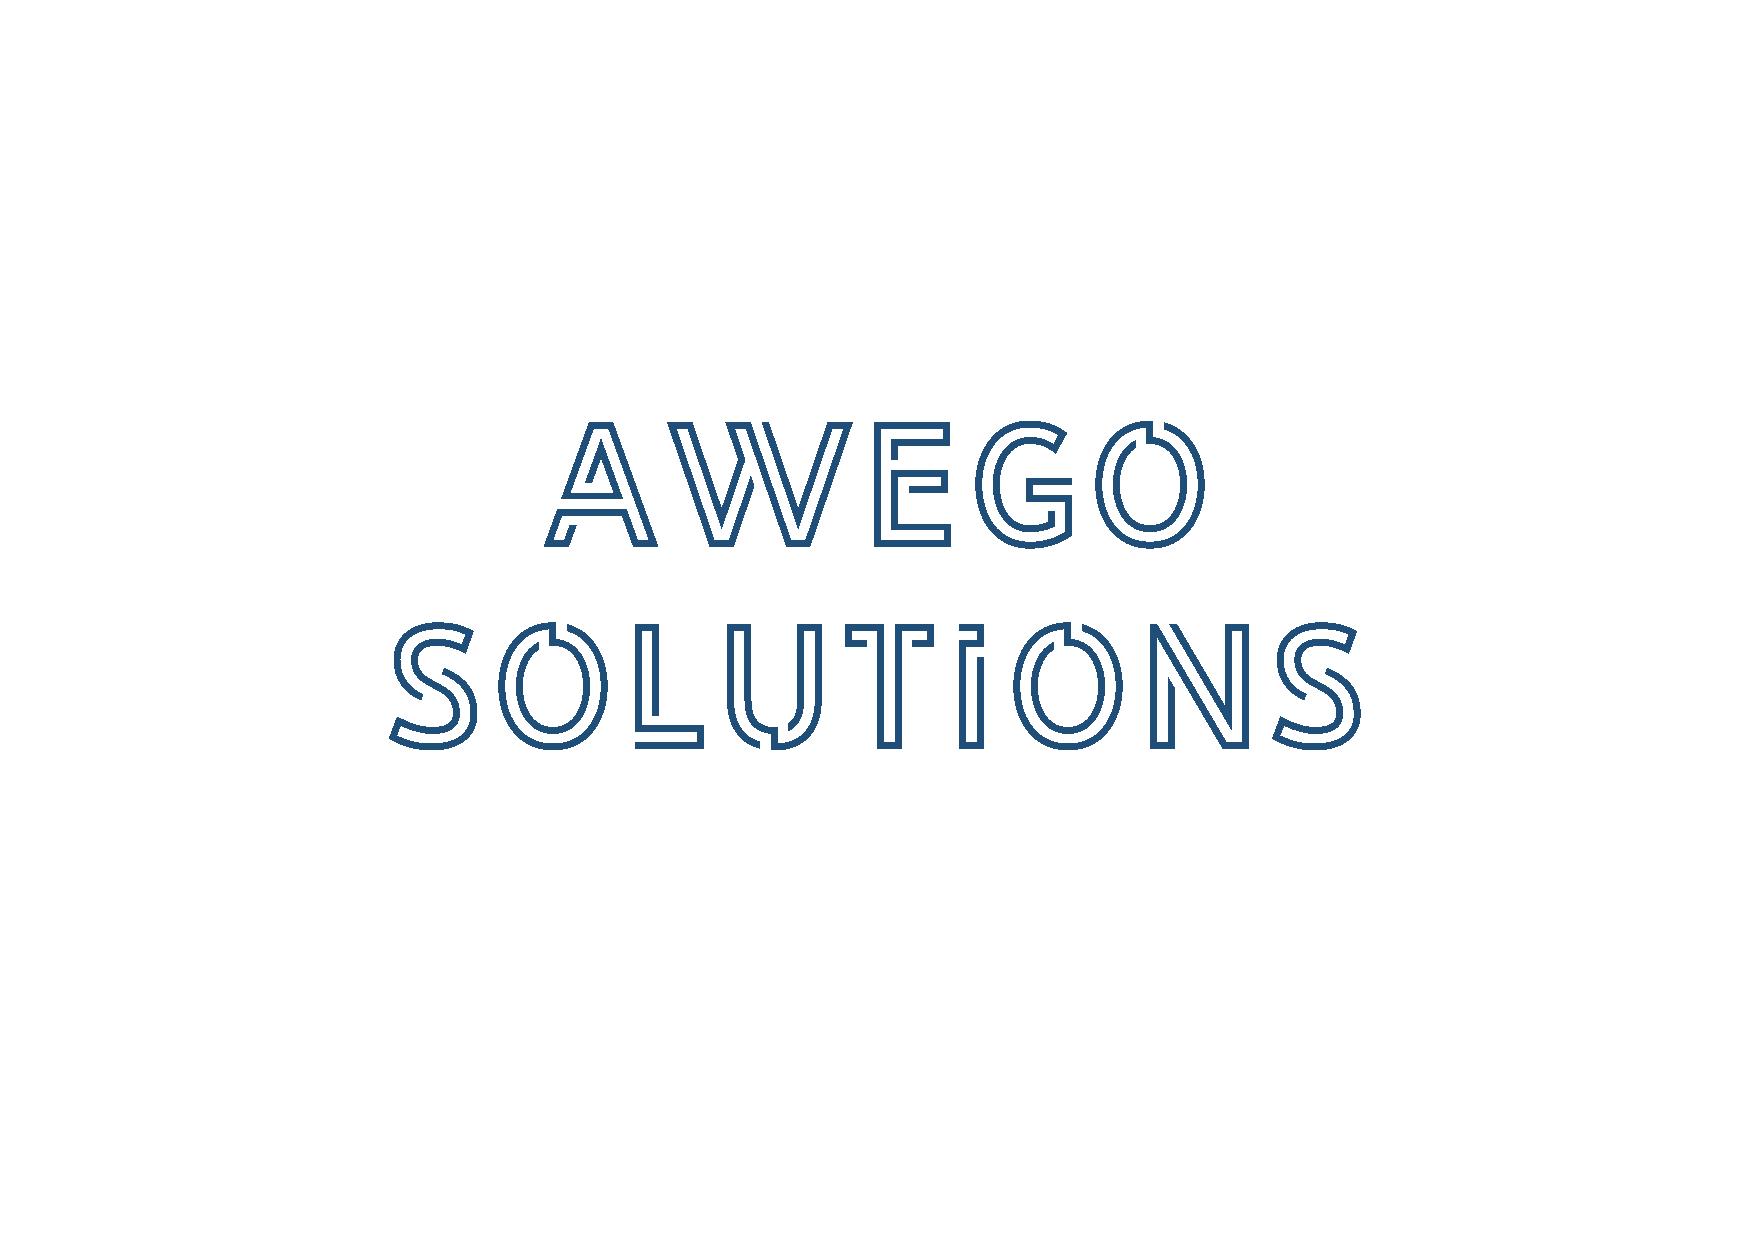 Awego solutions